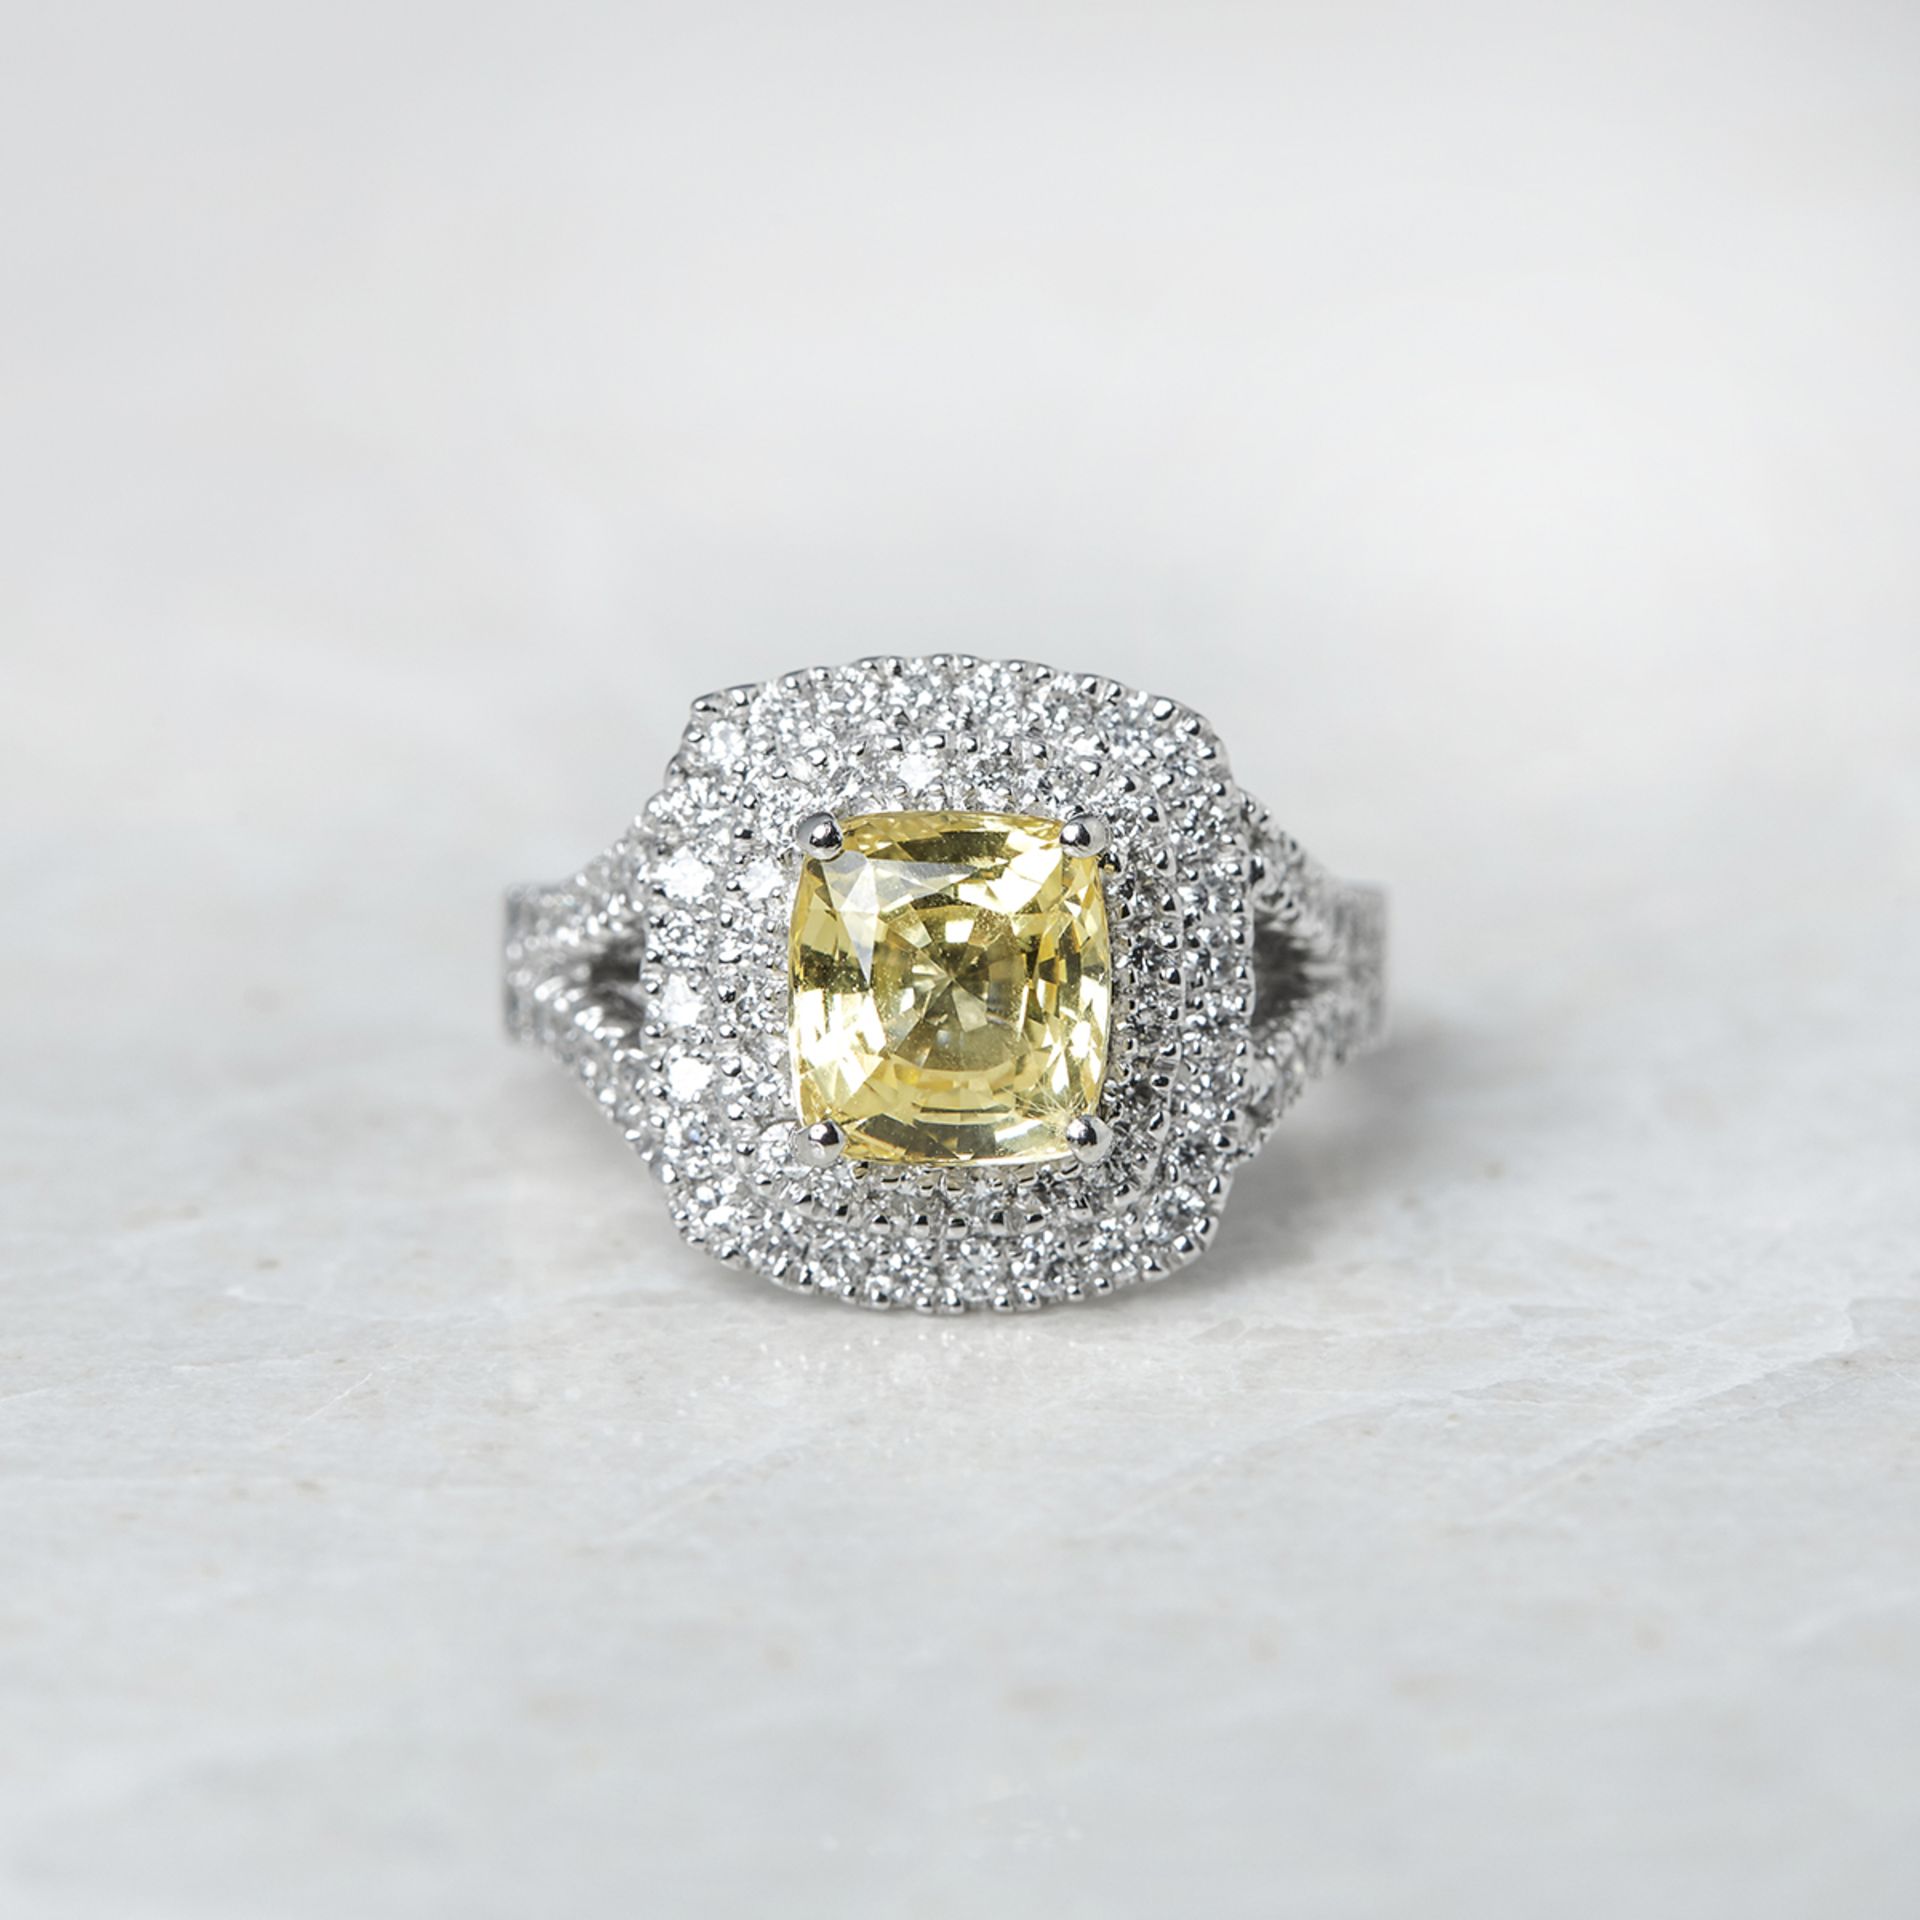 Unbranded Platinum Cushion Cut 3.56ct Yellow Sapphire & 0.85ct Diamond Ring - Image 2 of 8